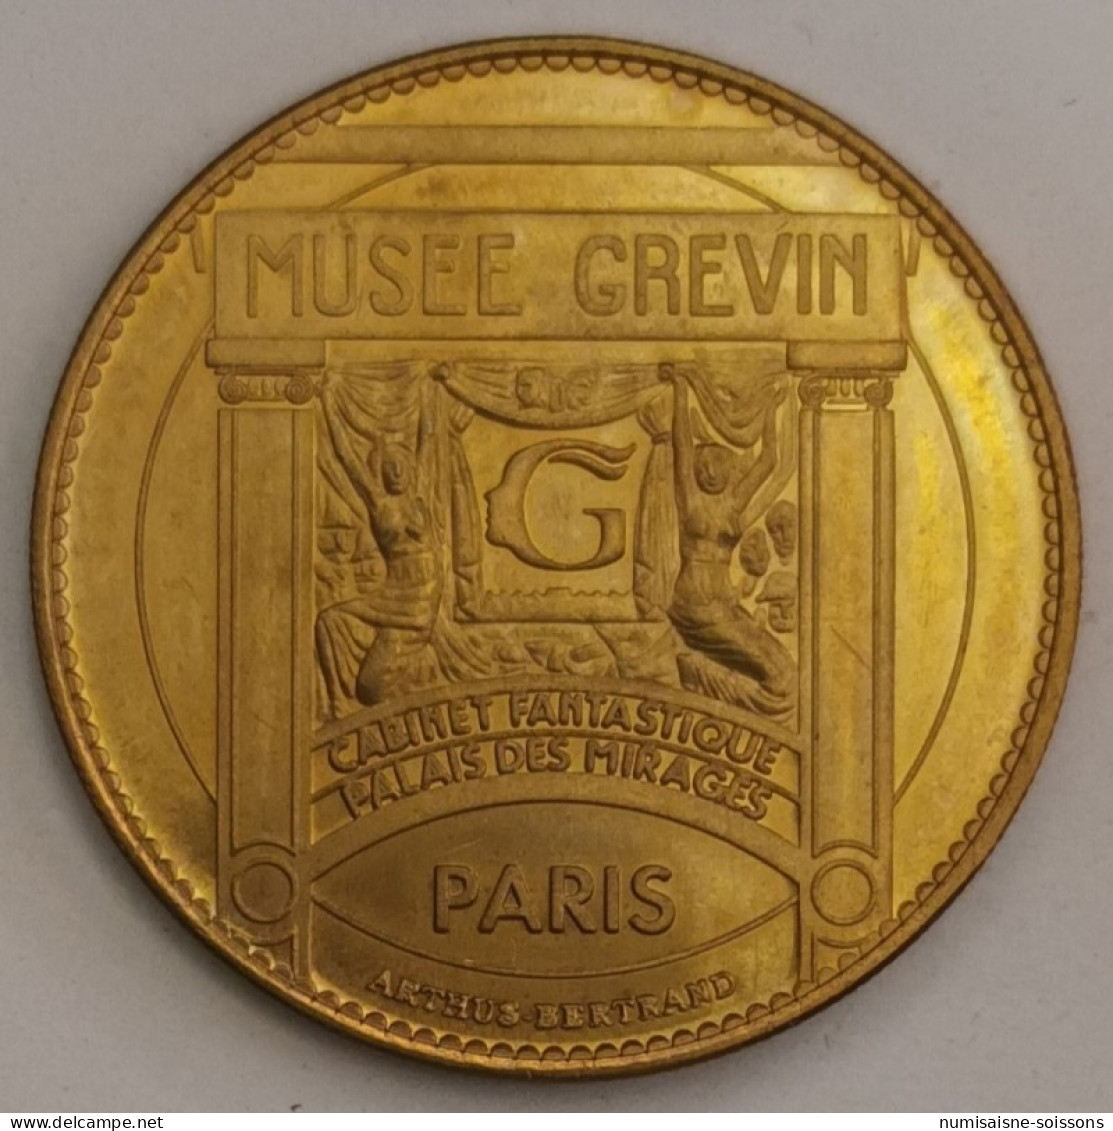 75 - PARIS - MUSEE GRÉVIN - MIMIE MATHY - ARTHUS BERTRAND - Zonder Datum